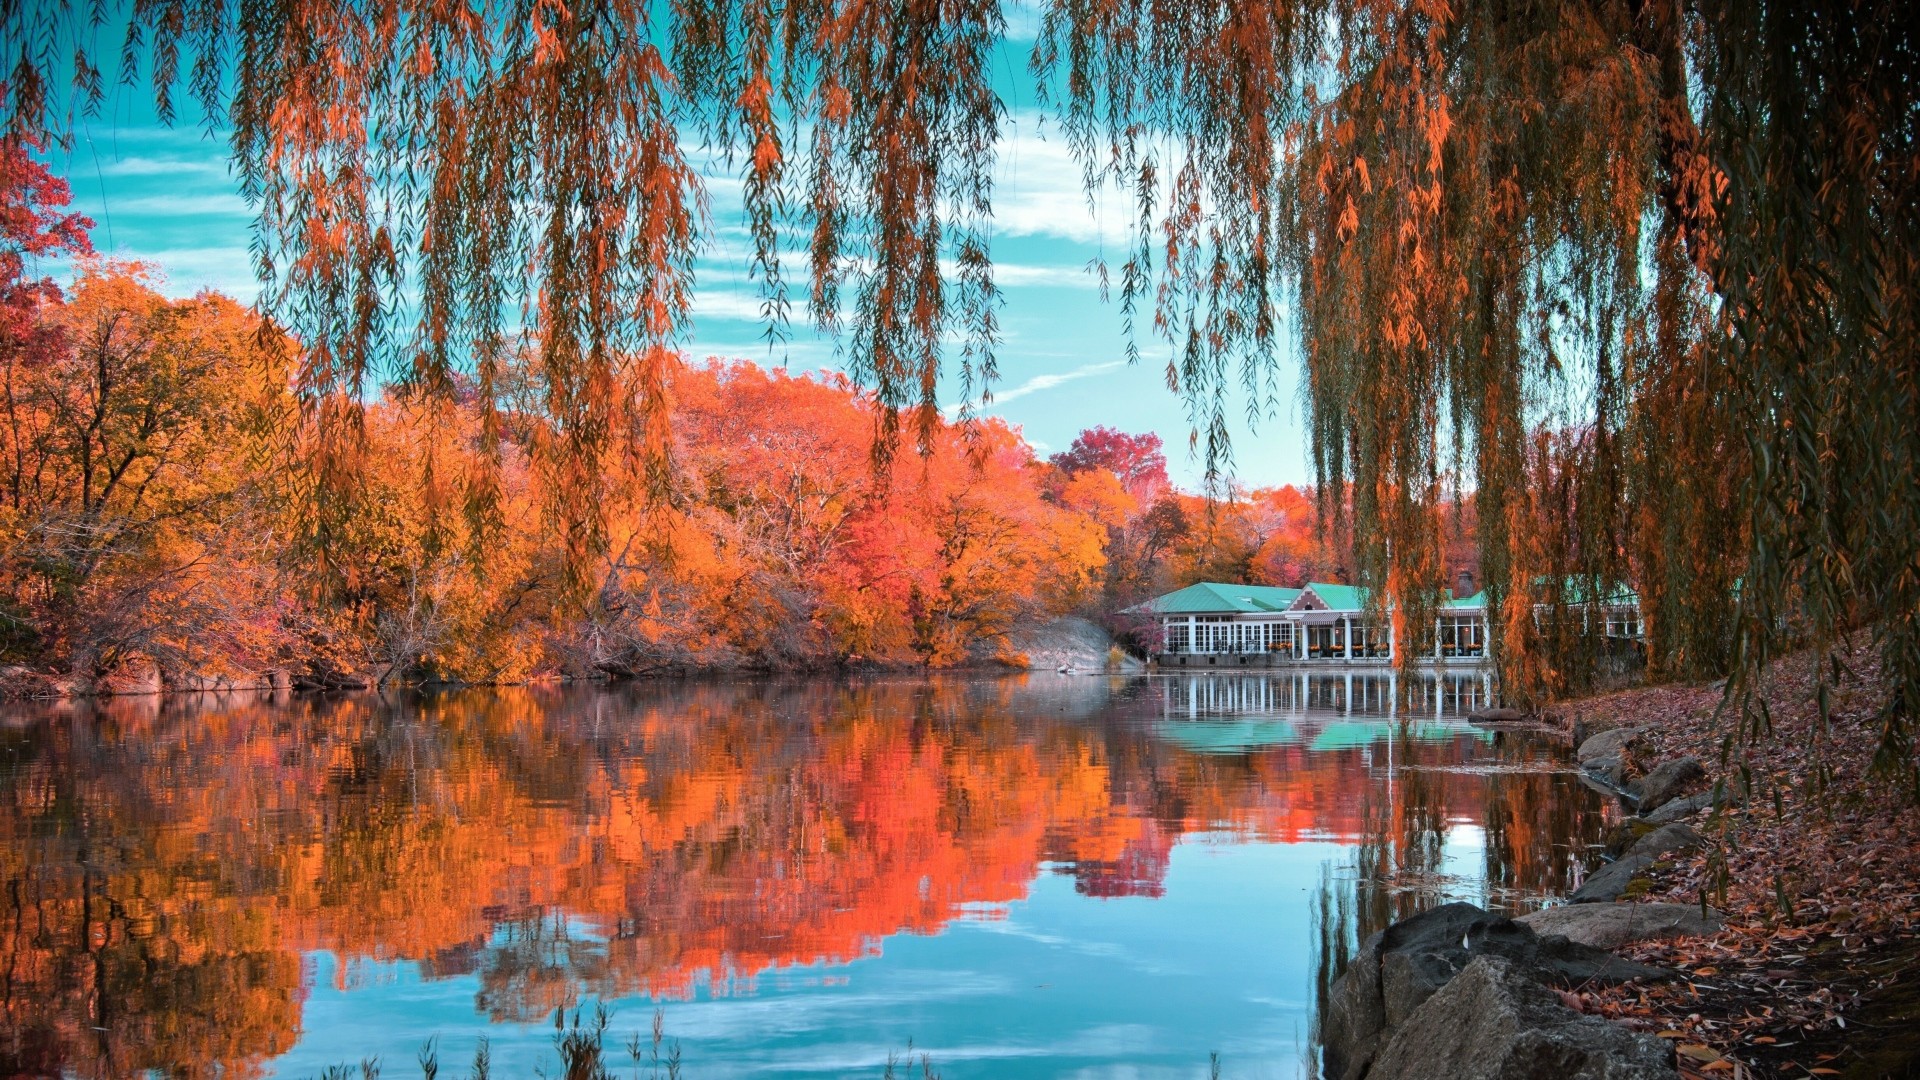 1920x1080 ... Background Full HD 1080p.  Wallpaper central park, new york,  autumn, beautiful landscape